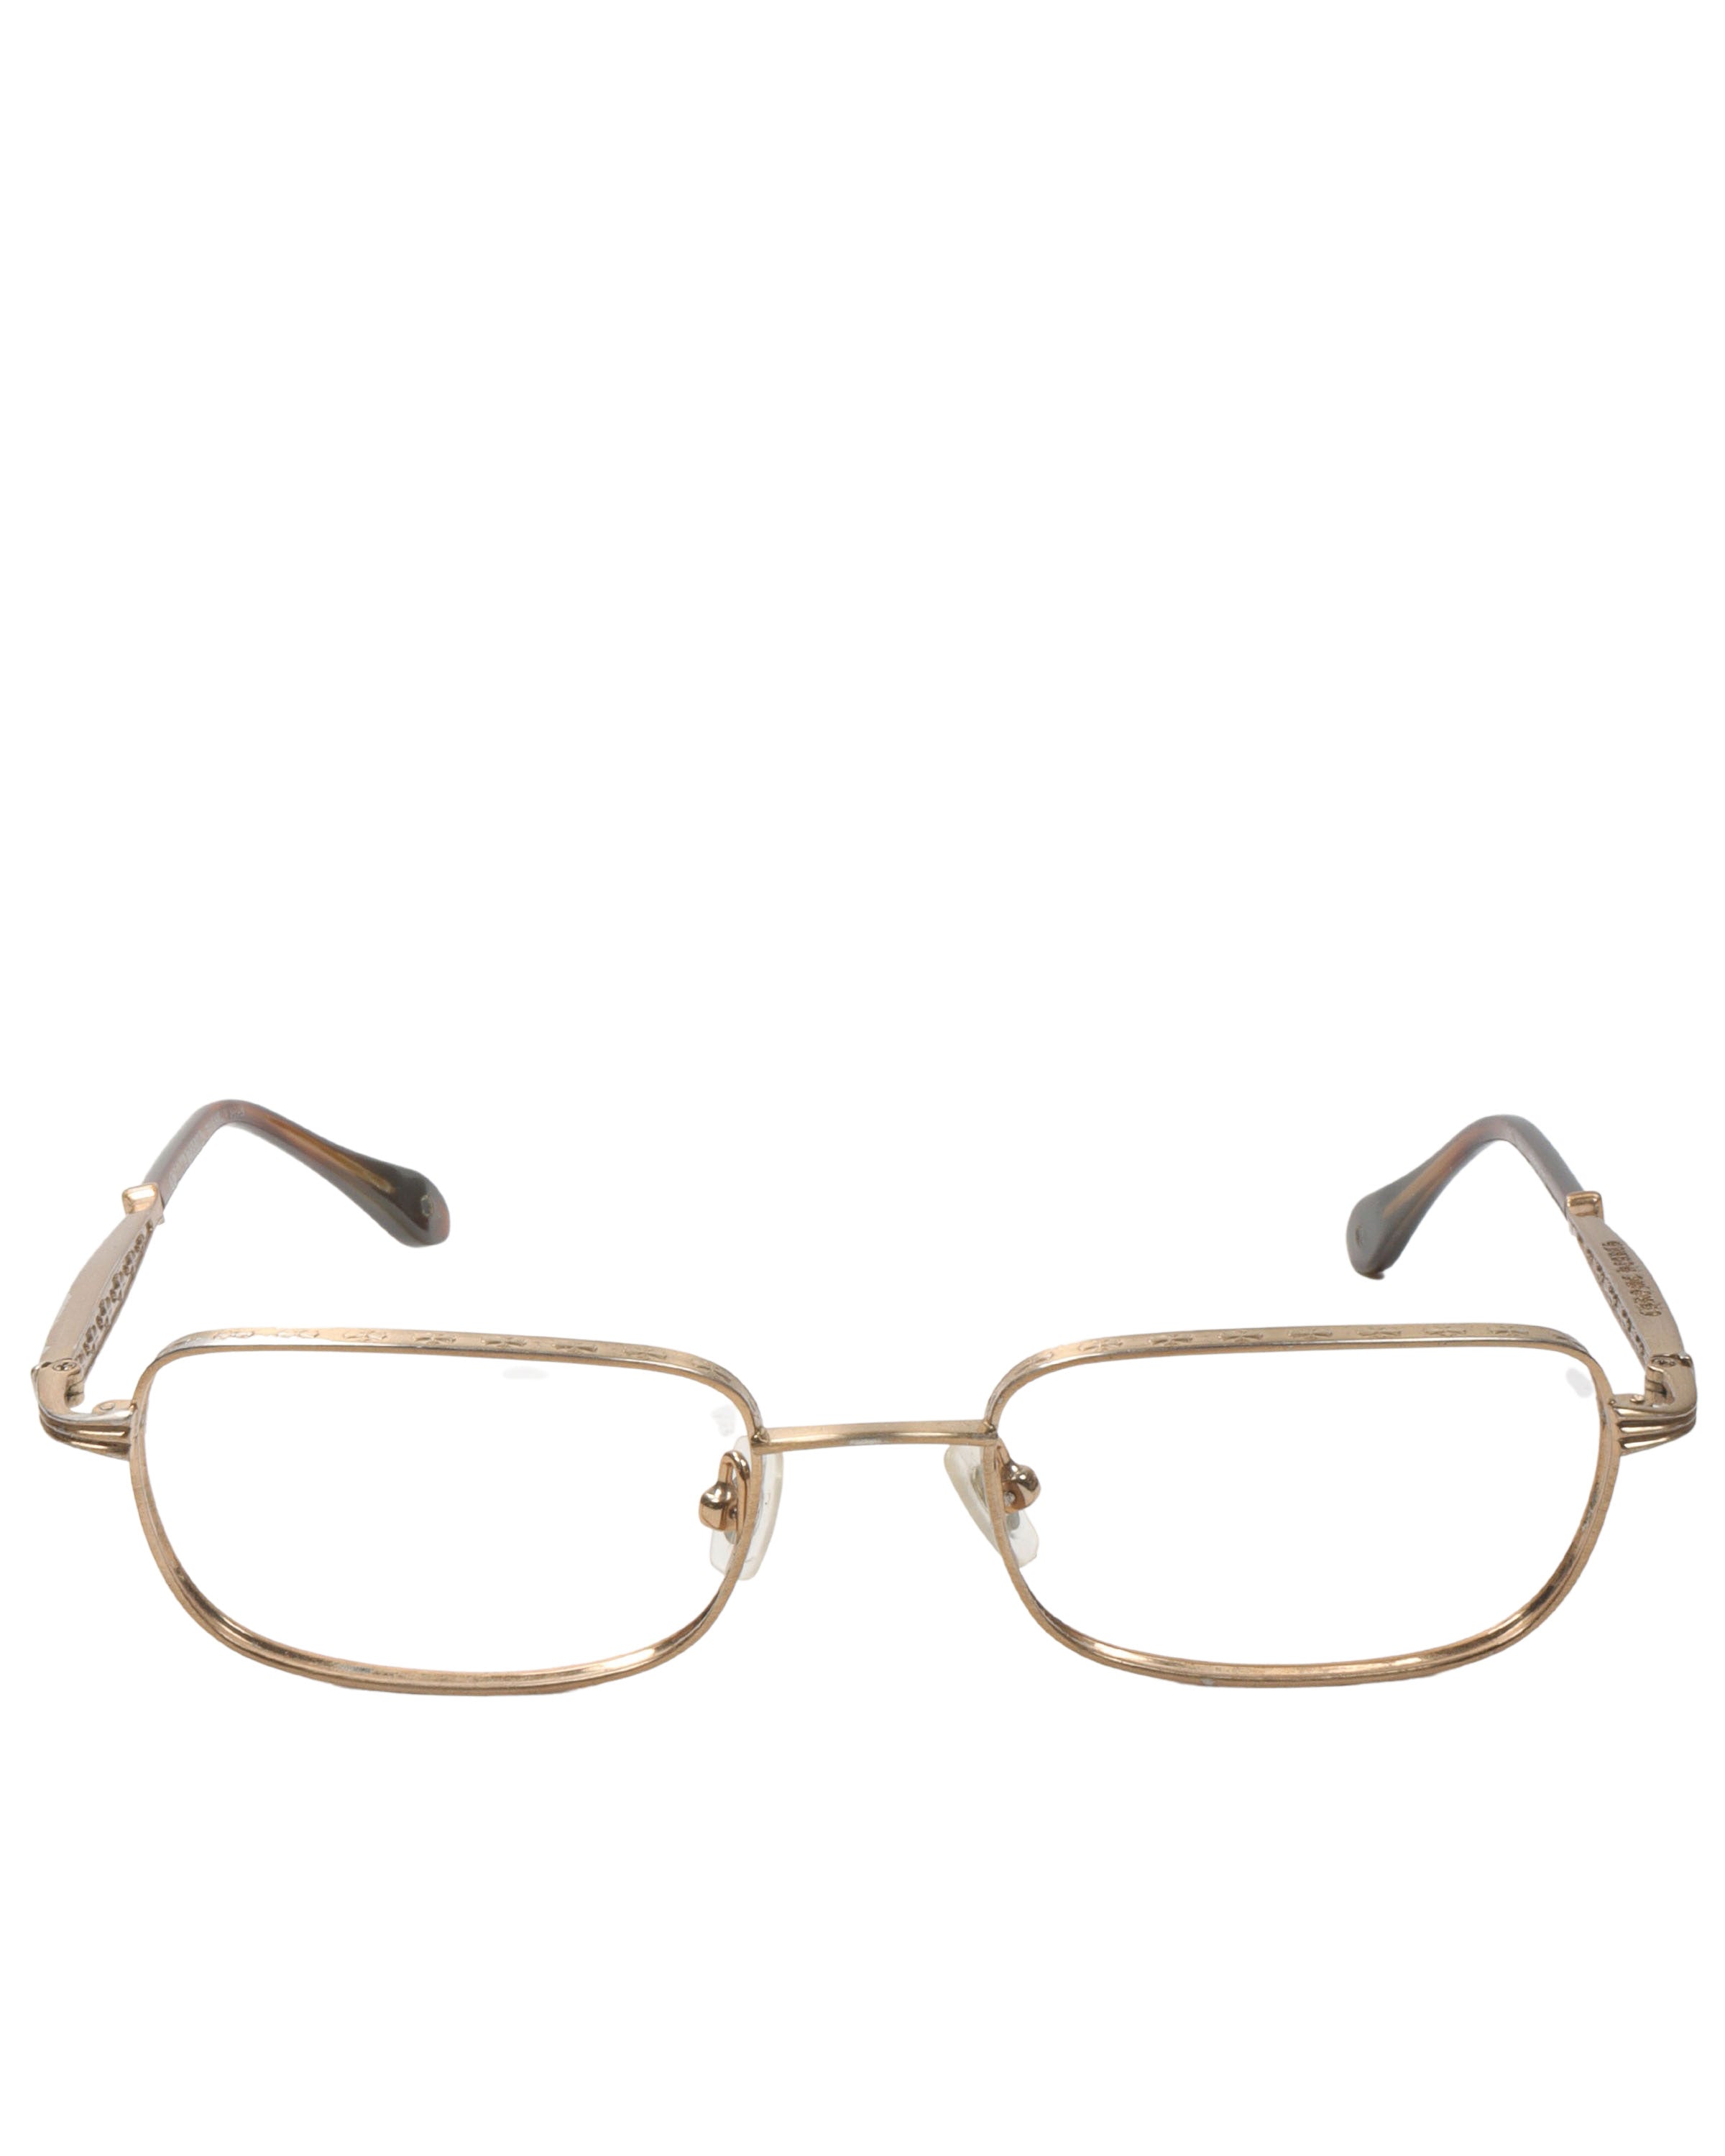 "VACANT" Glasses Frames